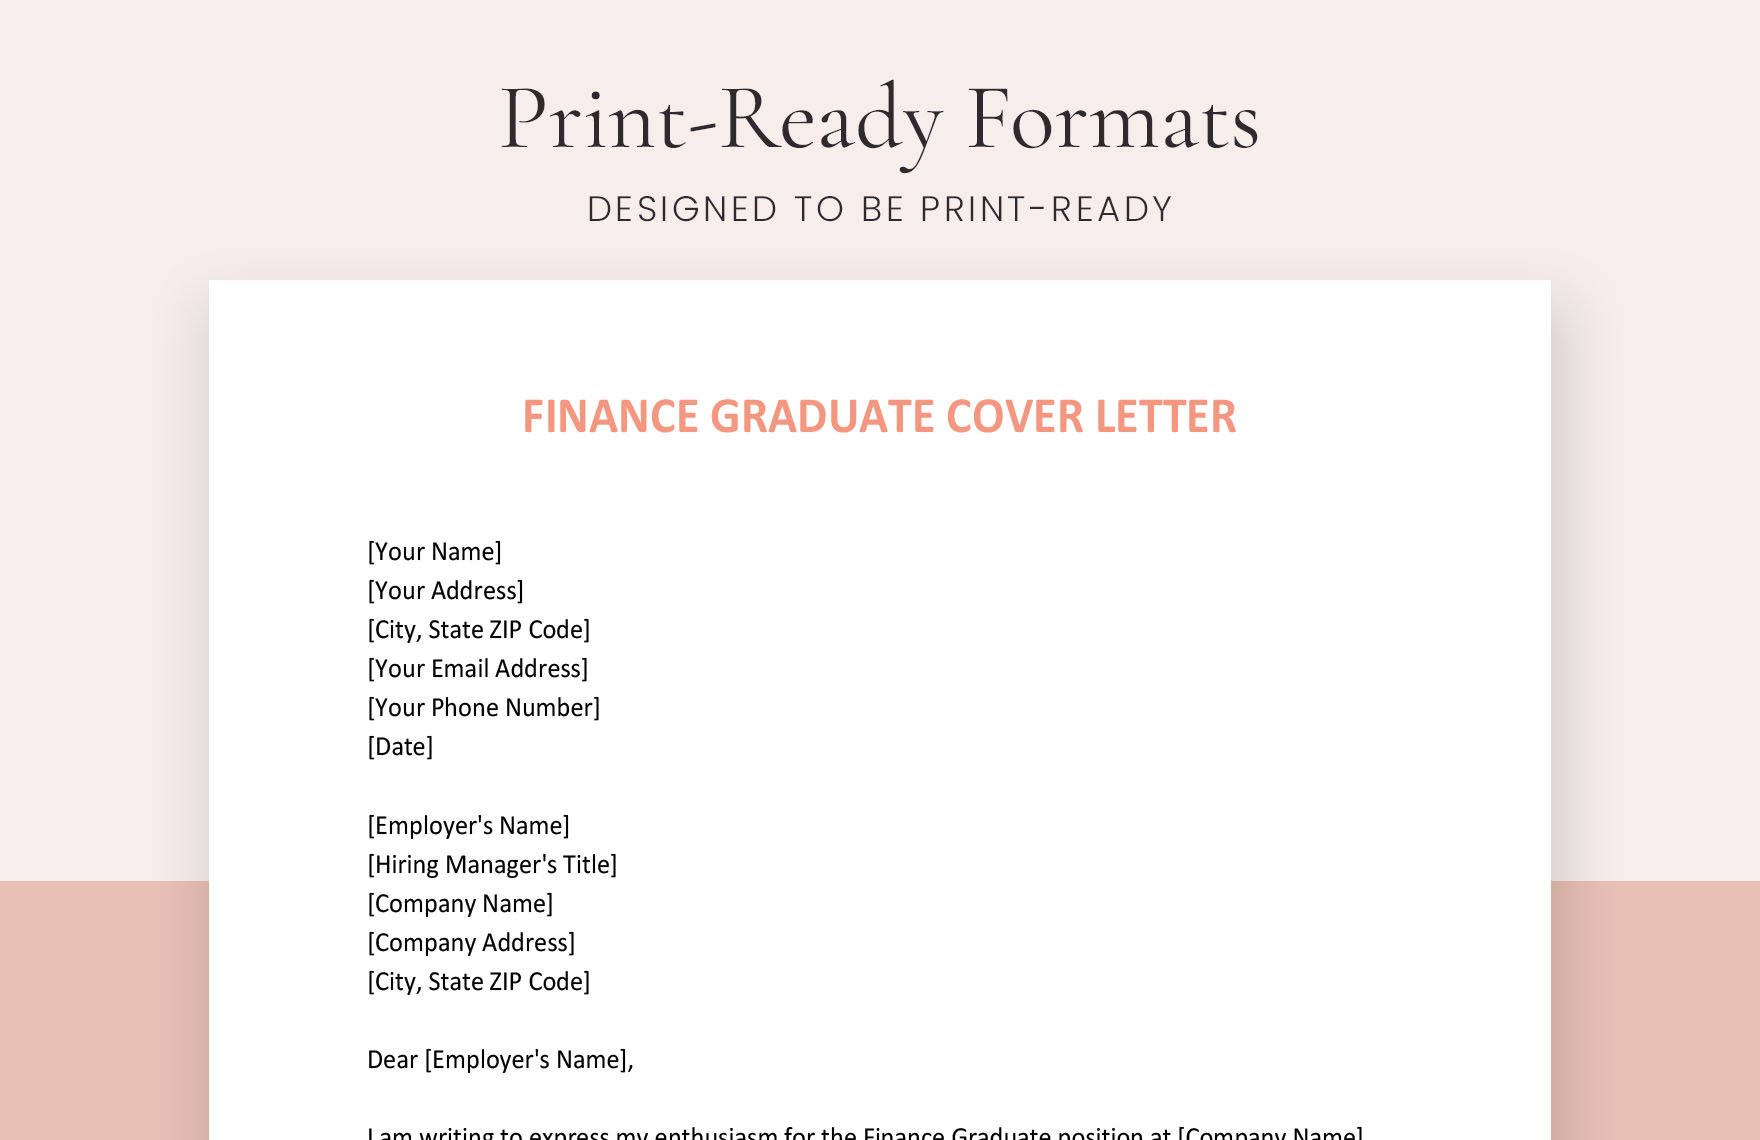 Finance Graduate Cover Letter